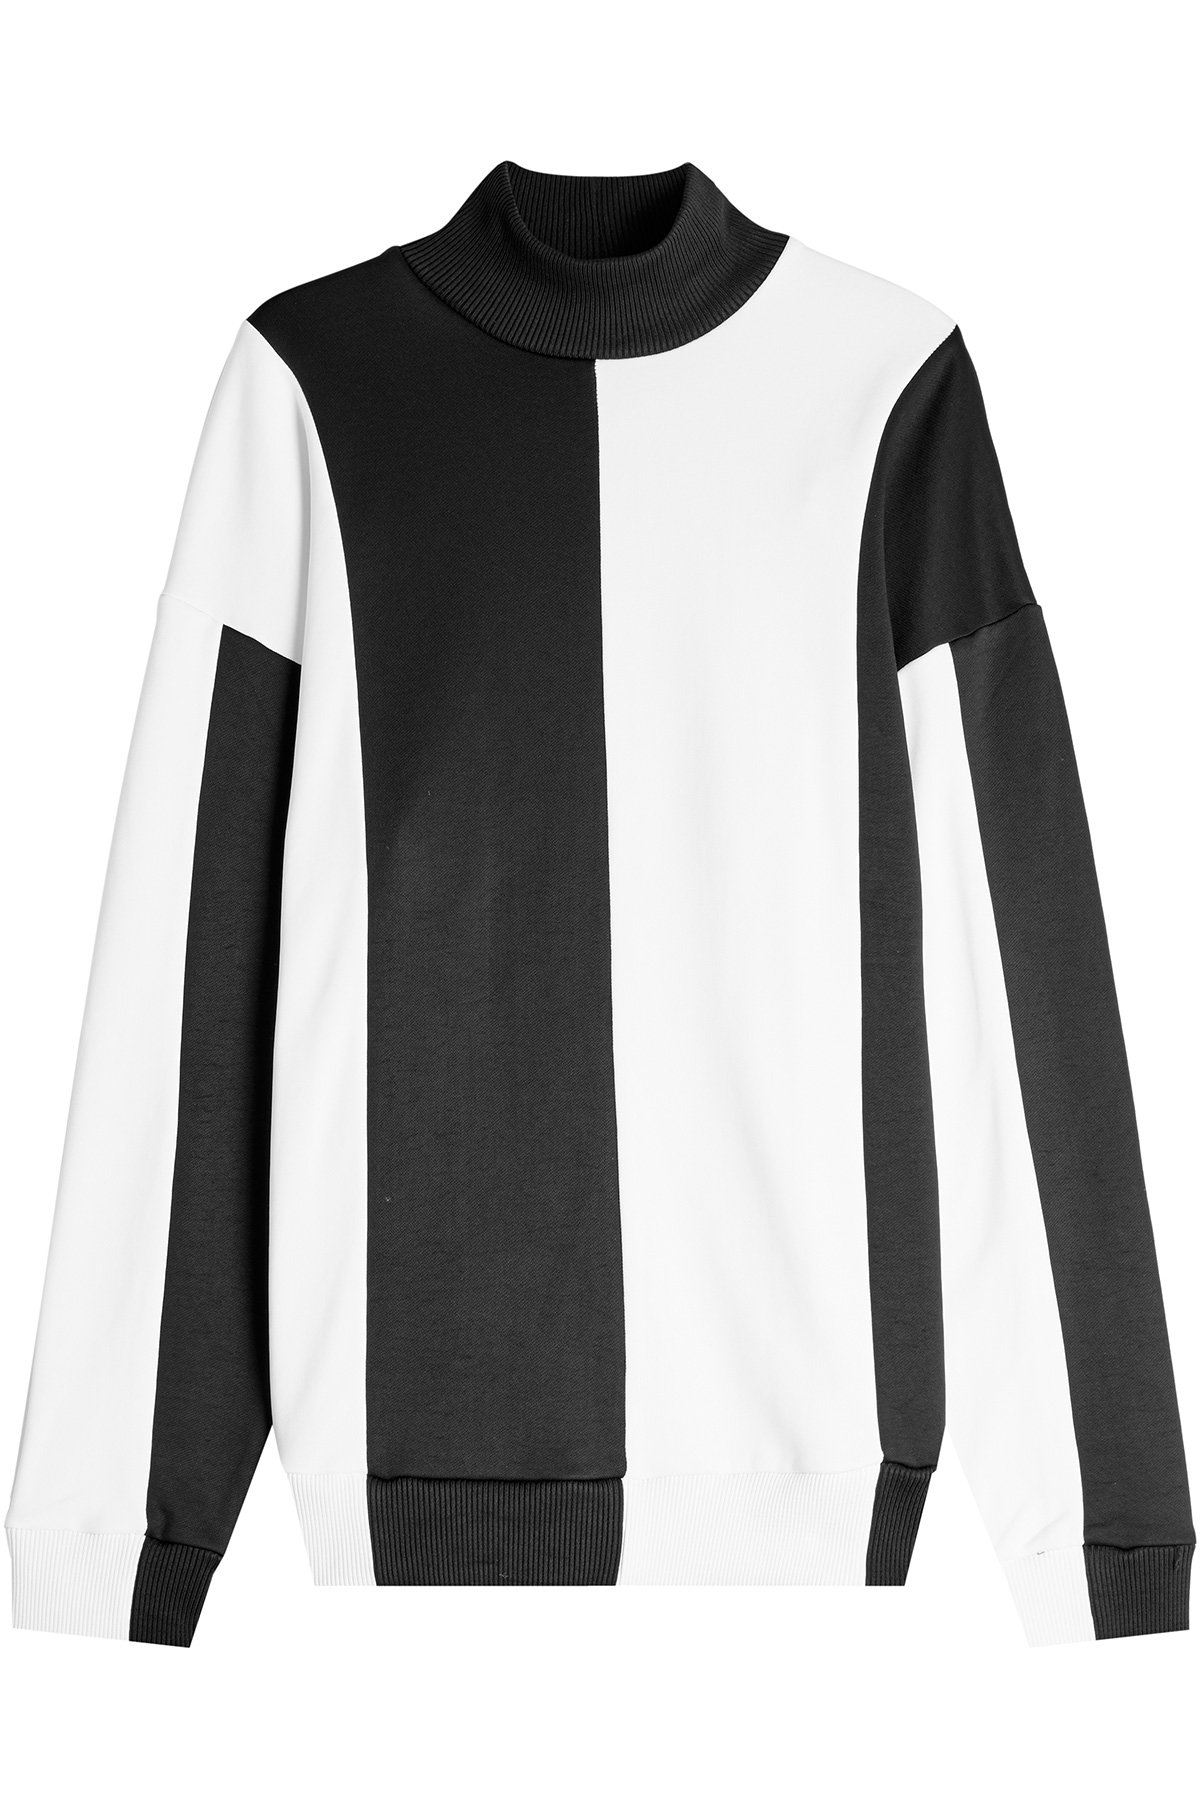 Marques' Almeida - Striped Turtleneck Sweatshirt with Cotton